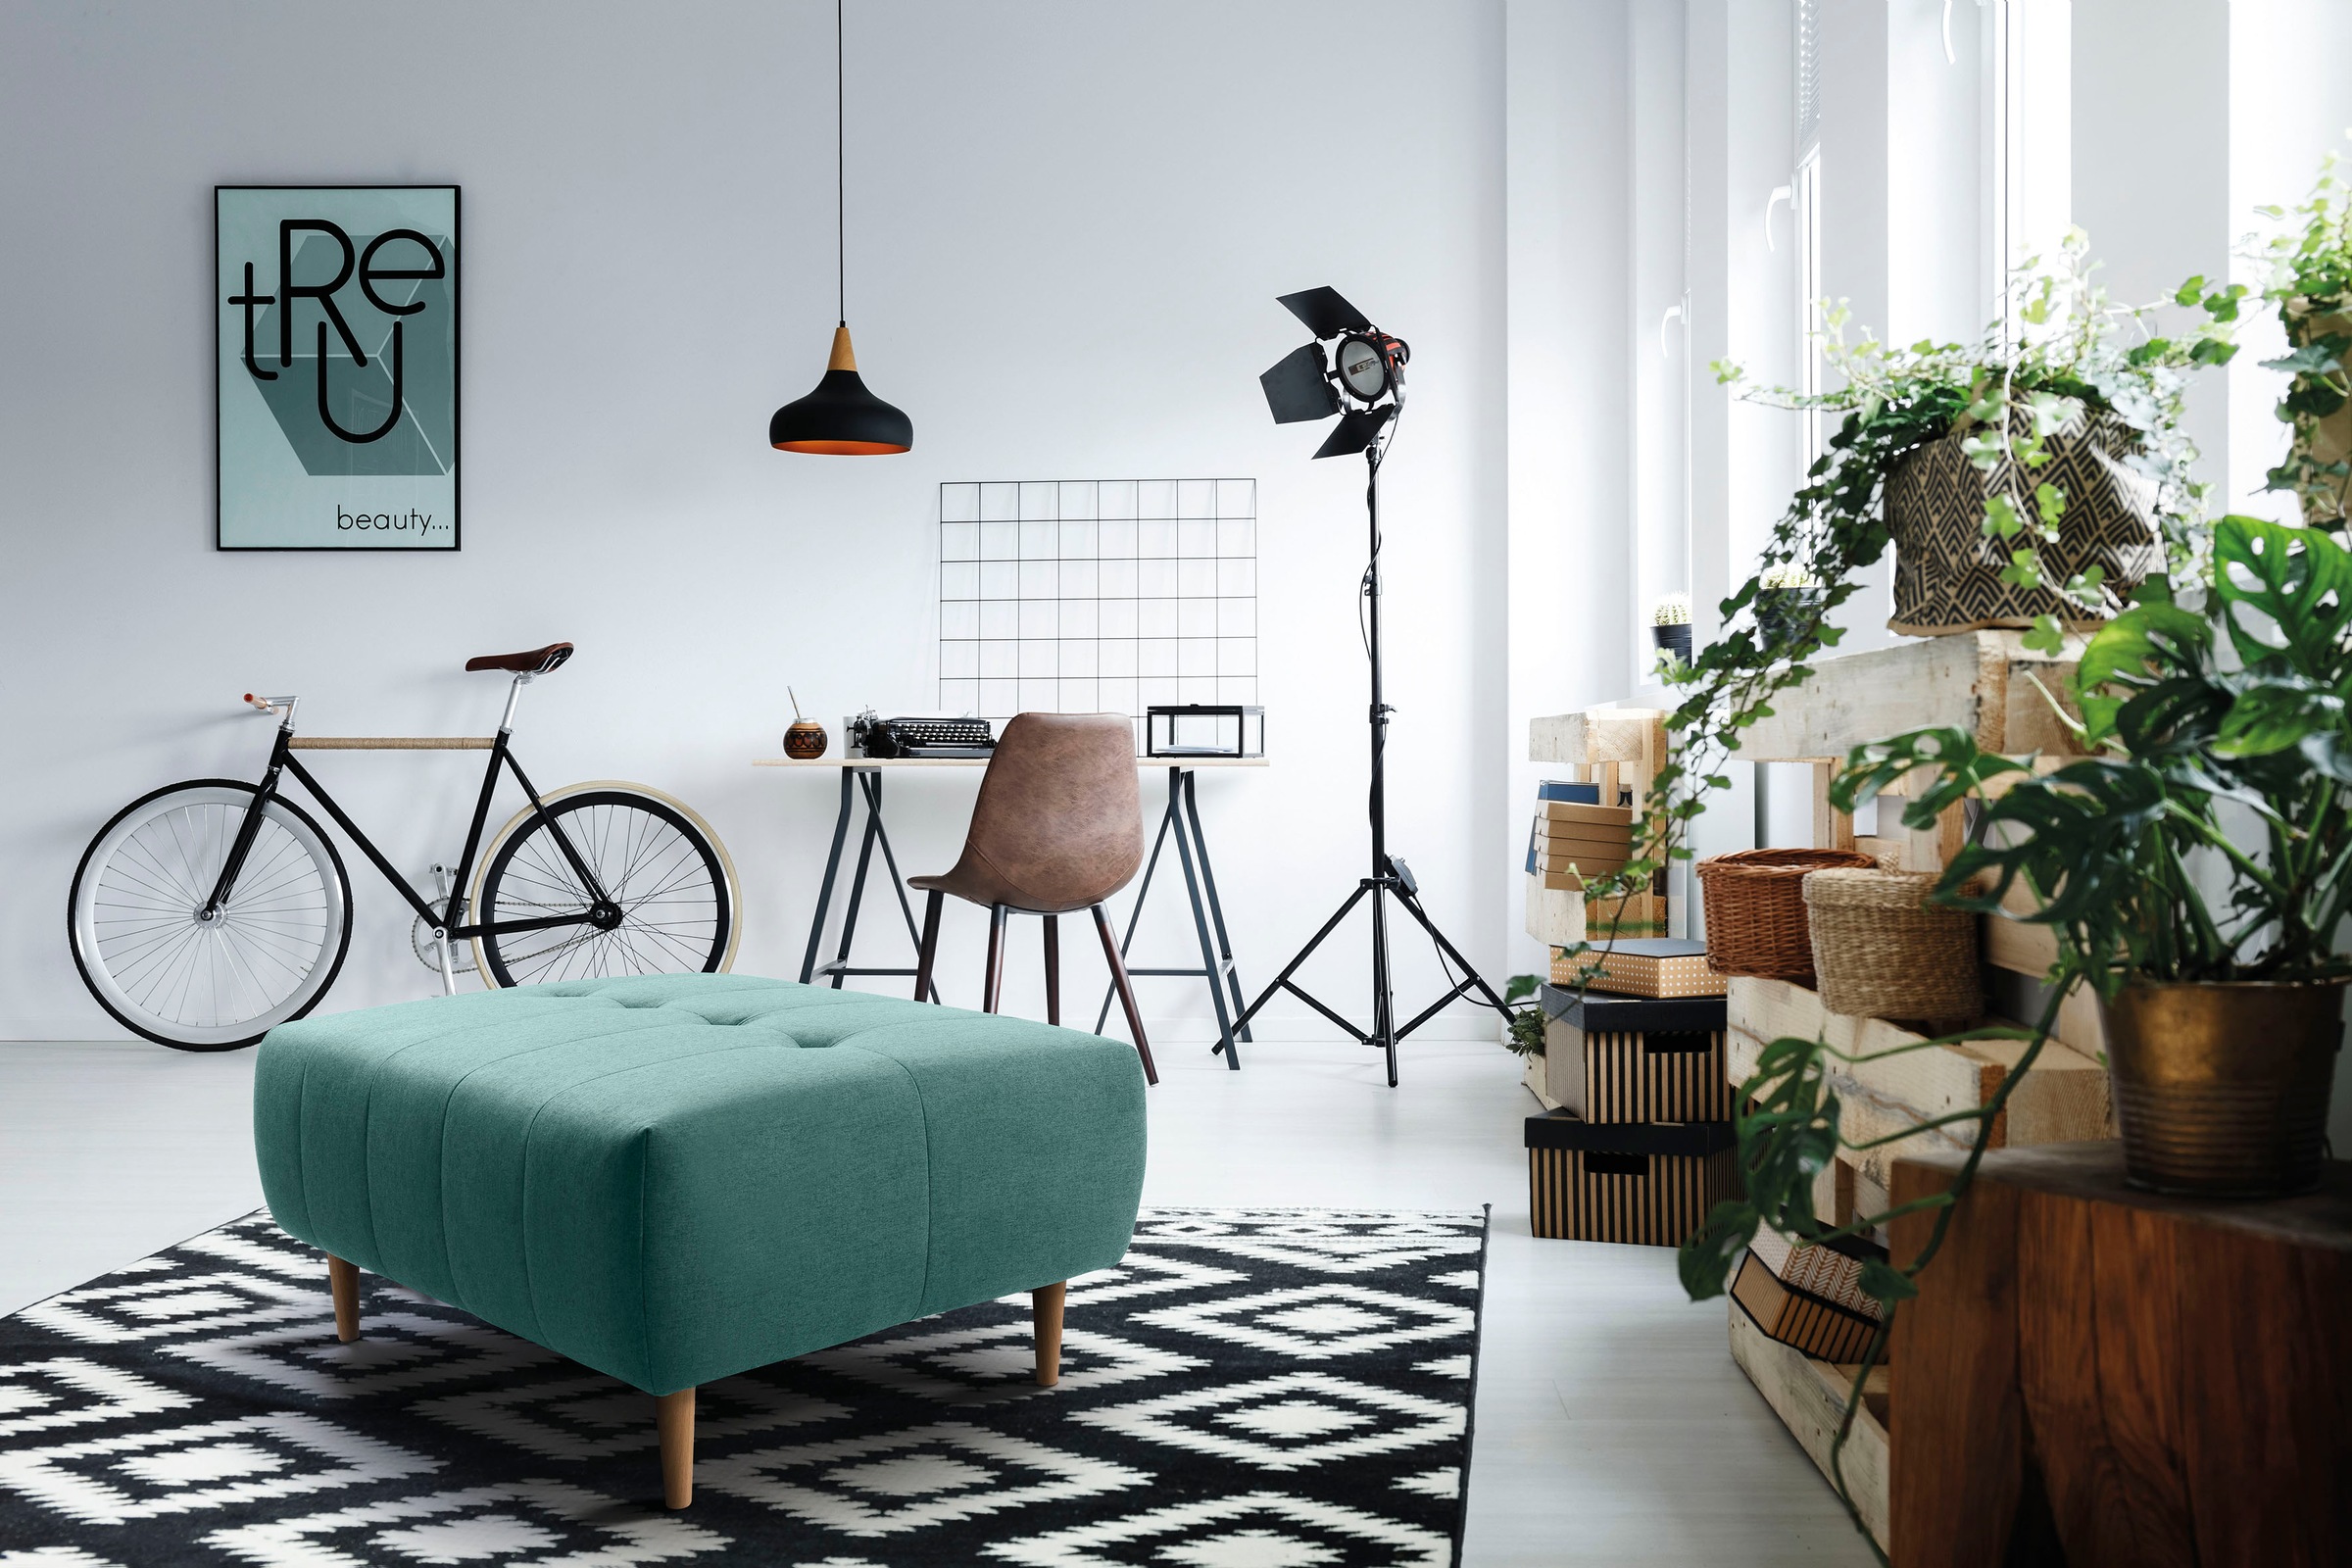 exxpo - sofa fashion Hocker »Soraya«, mit Holzfüßen, frei im Raum stellbar